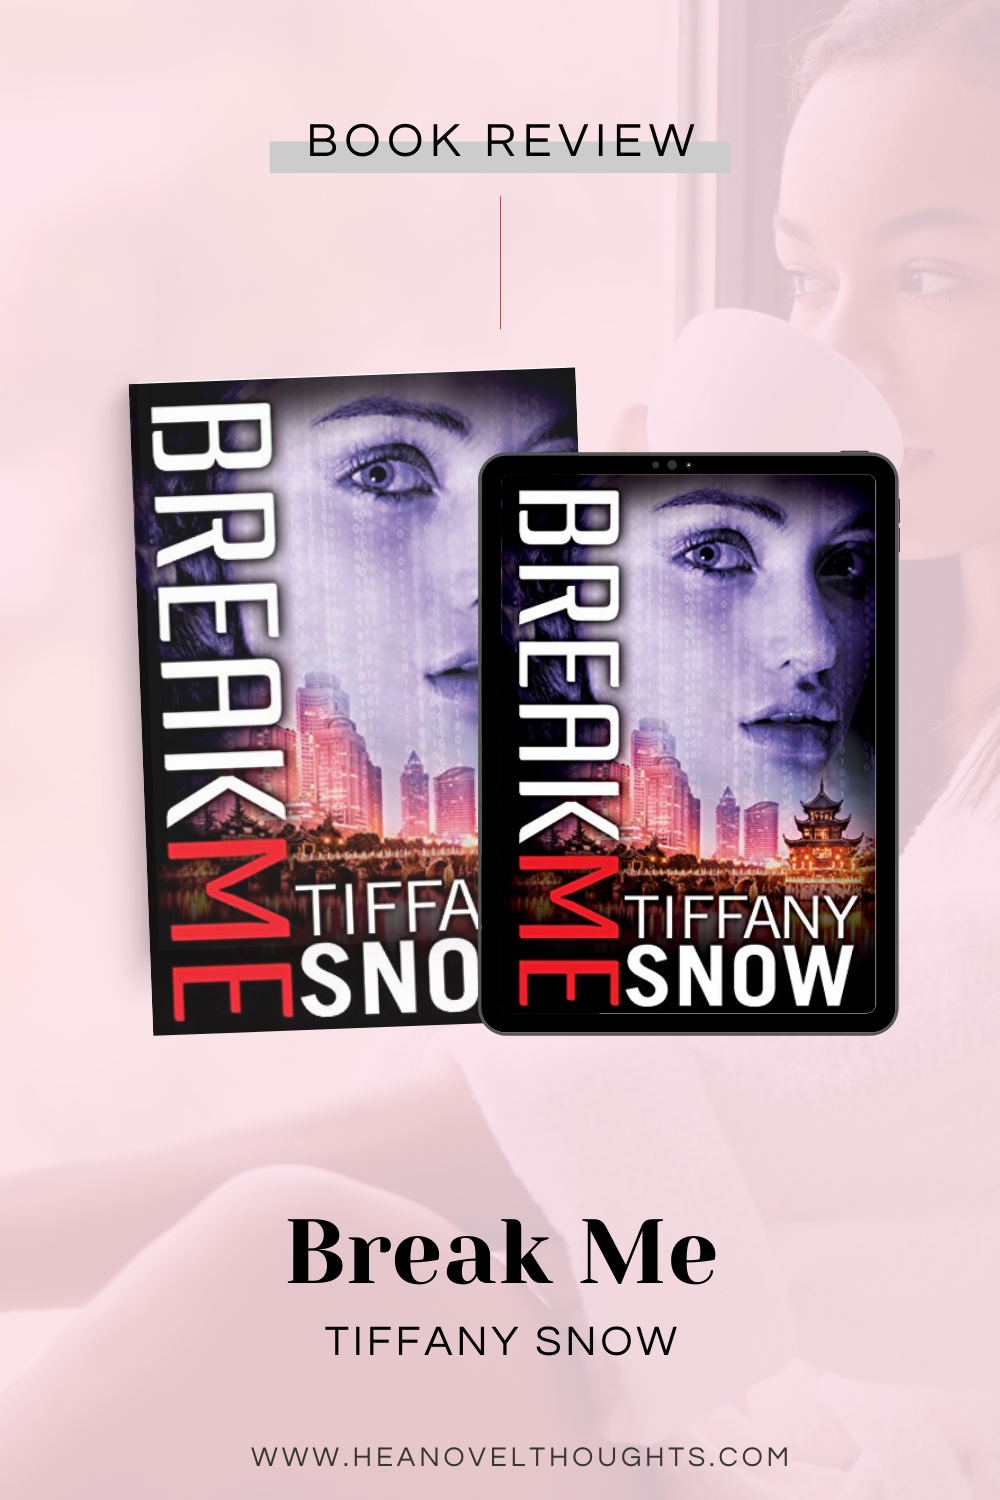 Break Me by Tiffany Snow